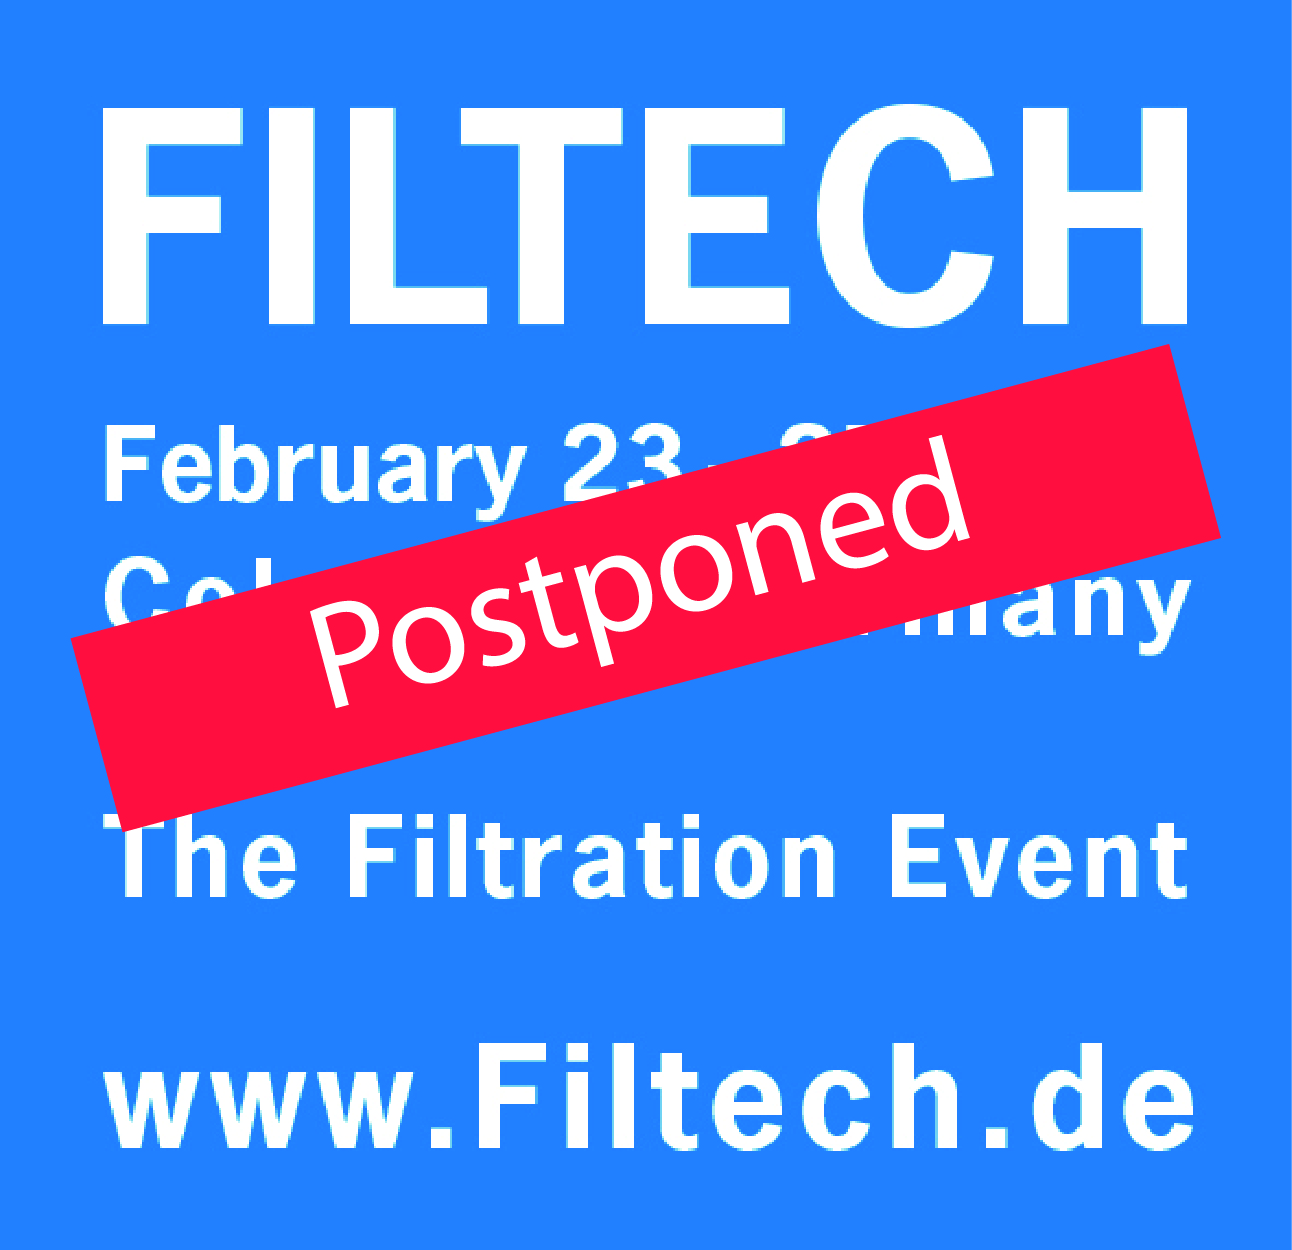 Filtech 2021 postponed